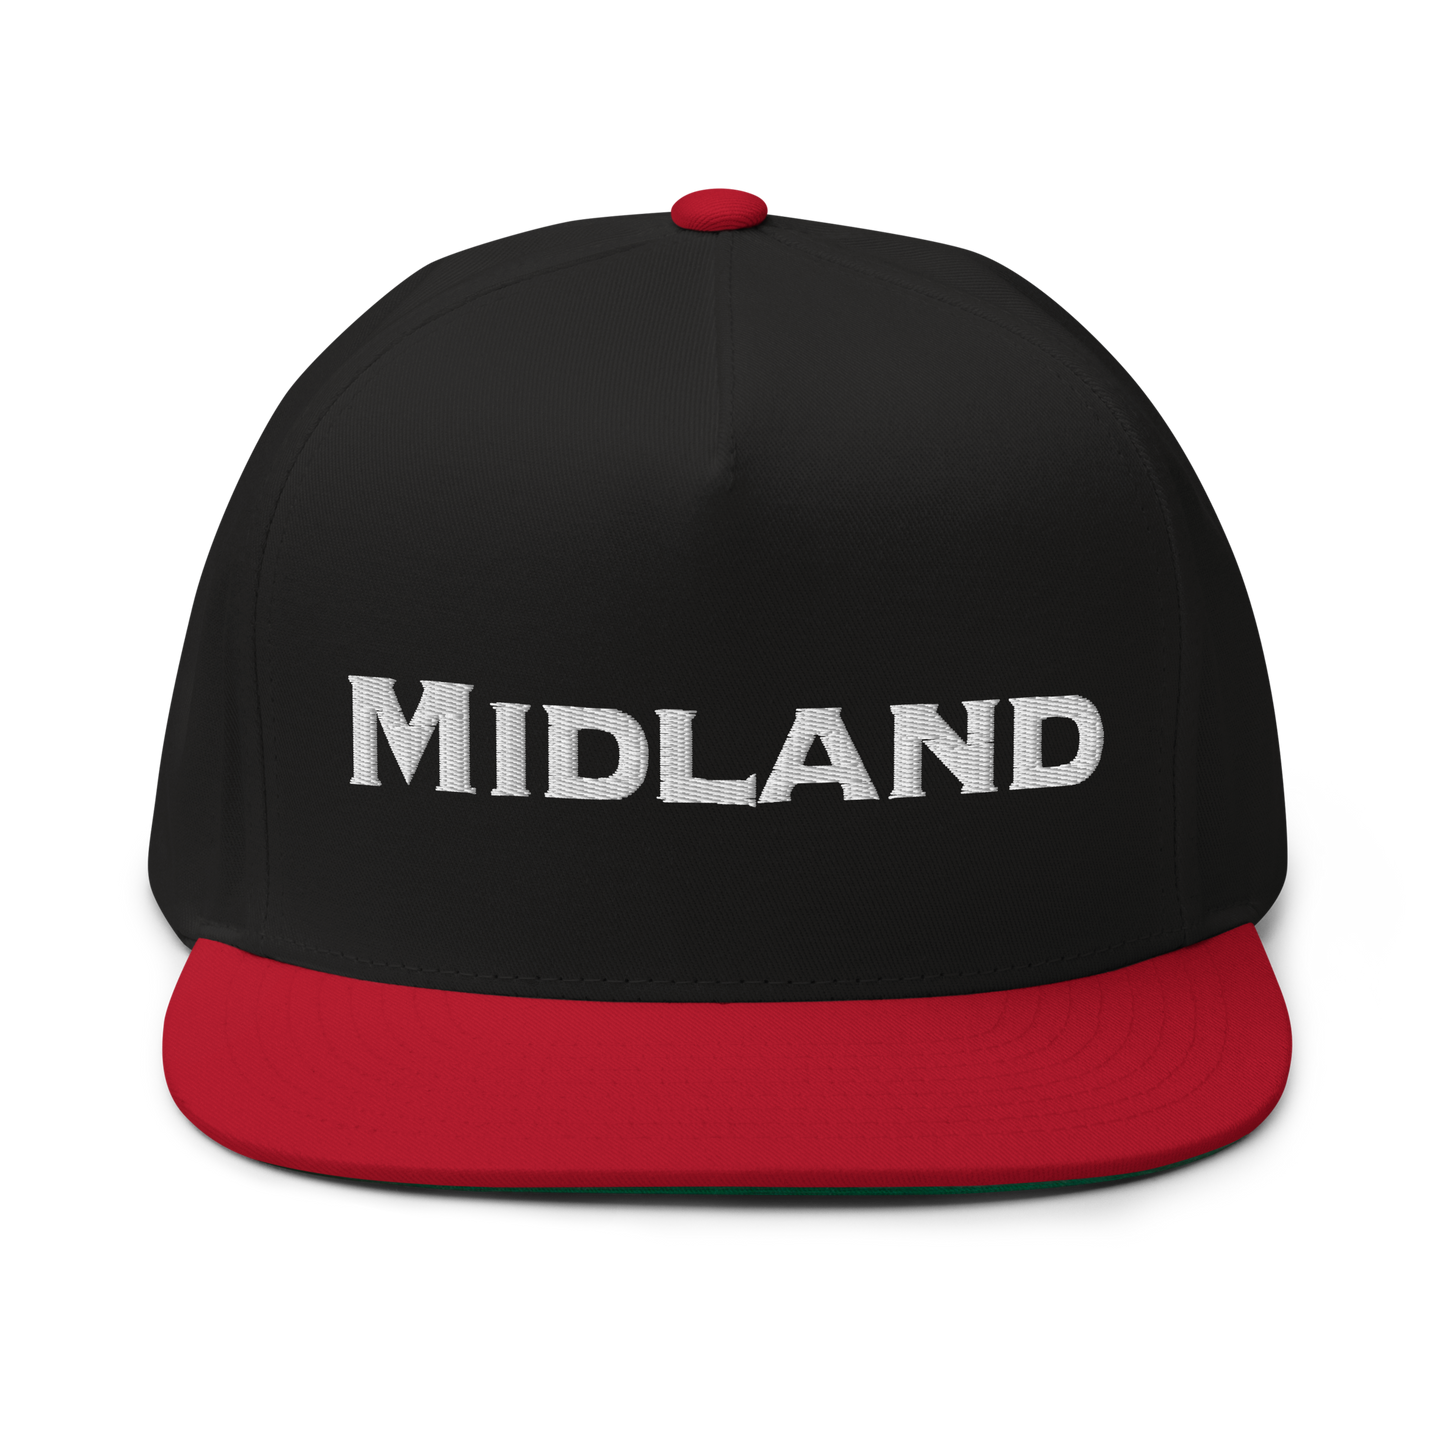 'Midland' Flat Bill Snapback | White/Black Embroidery